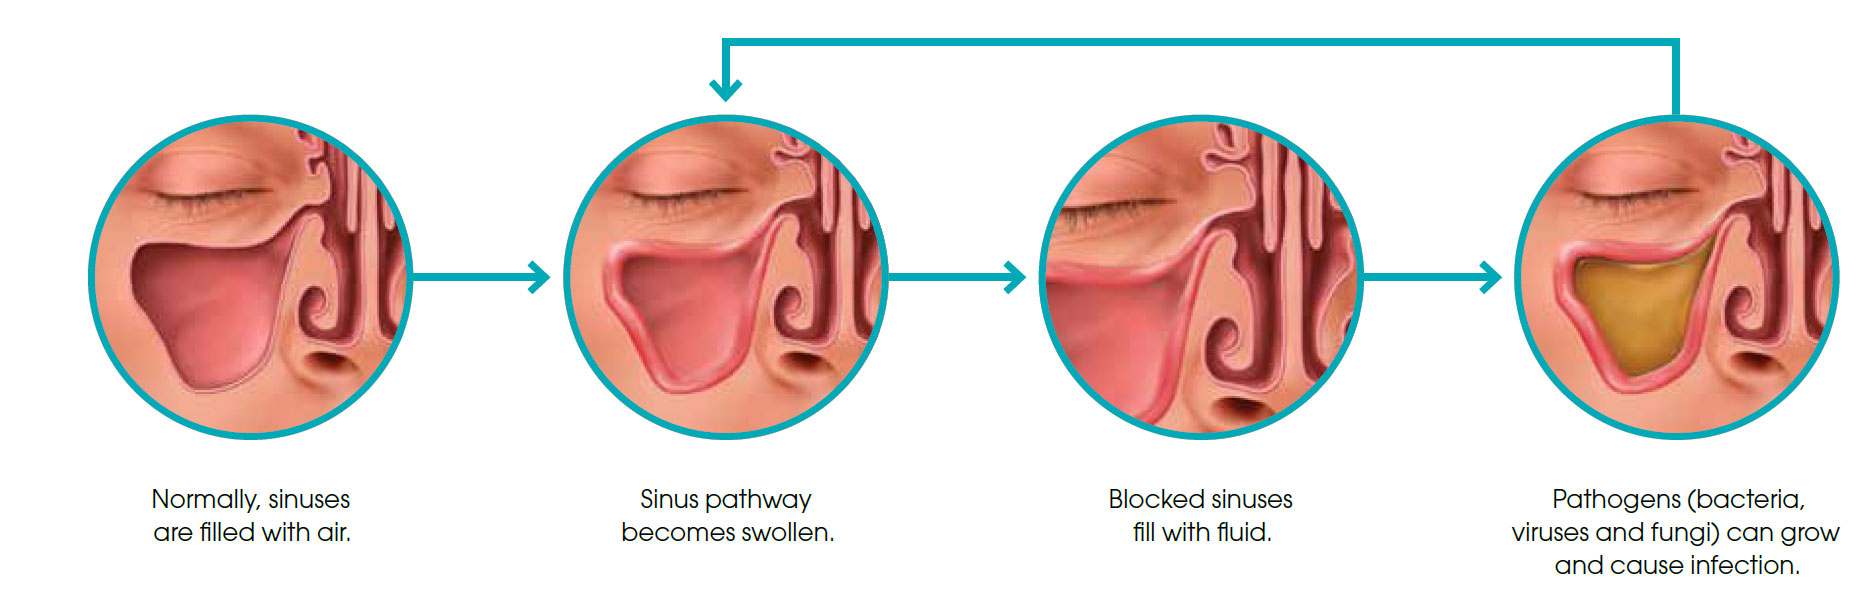 causes of Sinusitis